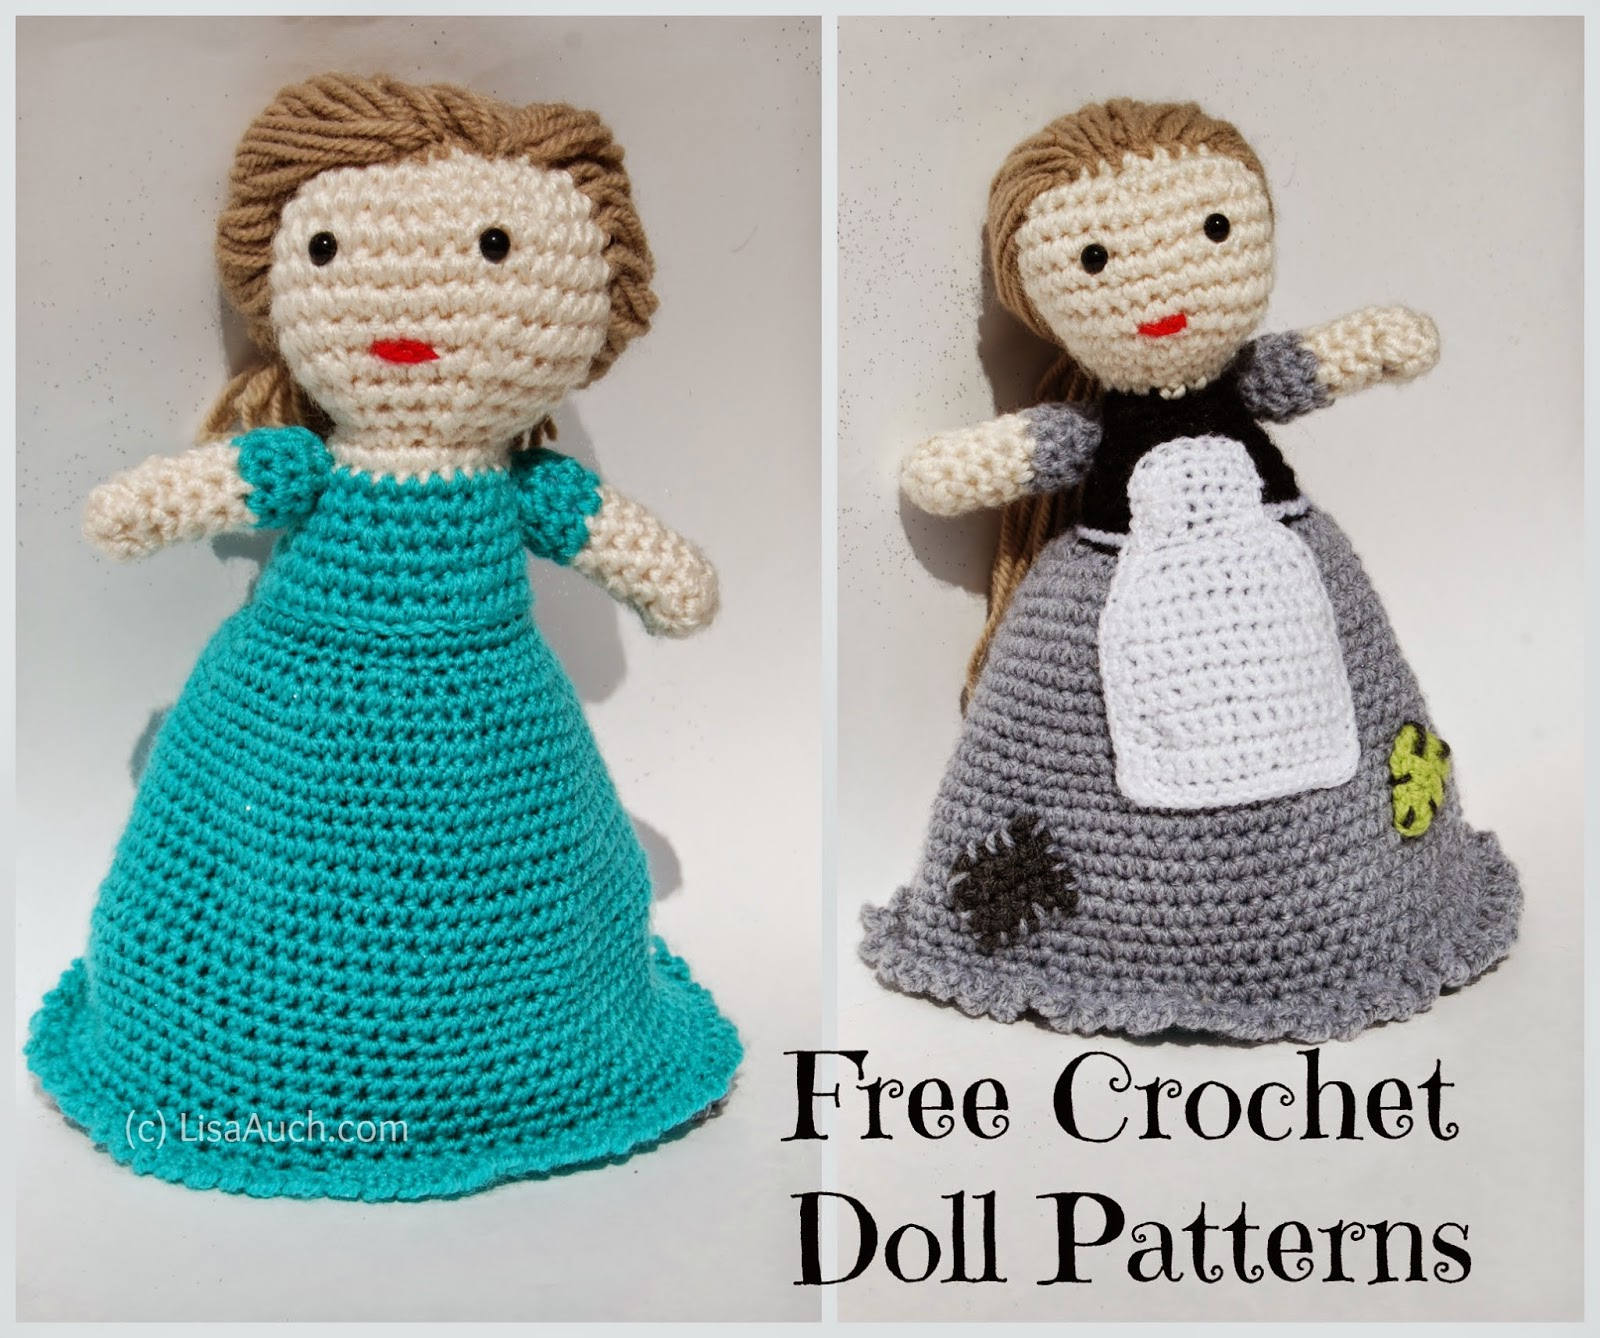 Amigurumi Doll Crochet Pattern Free Crochet Patterns And Designs Lisaauch Free Crochet